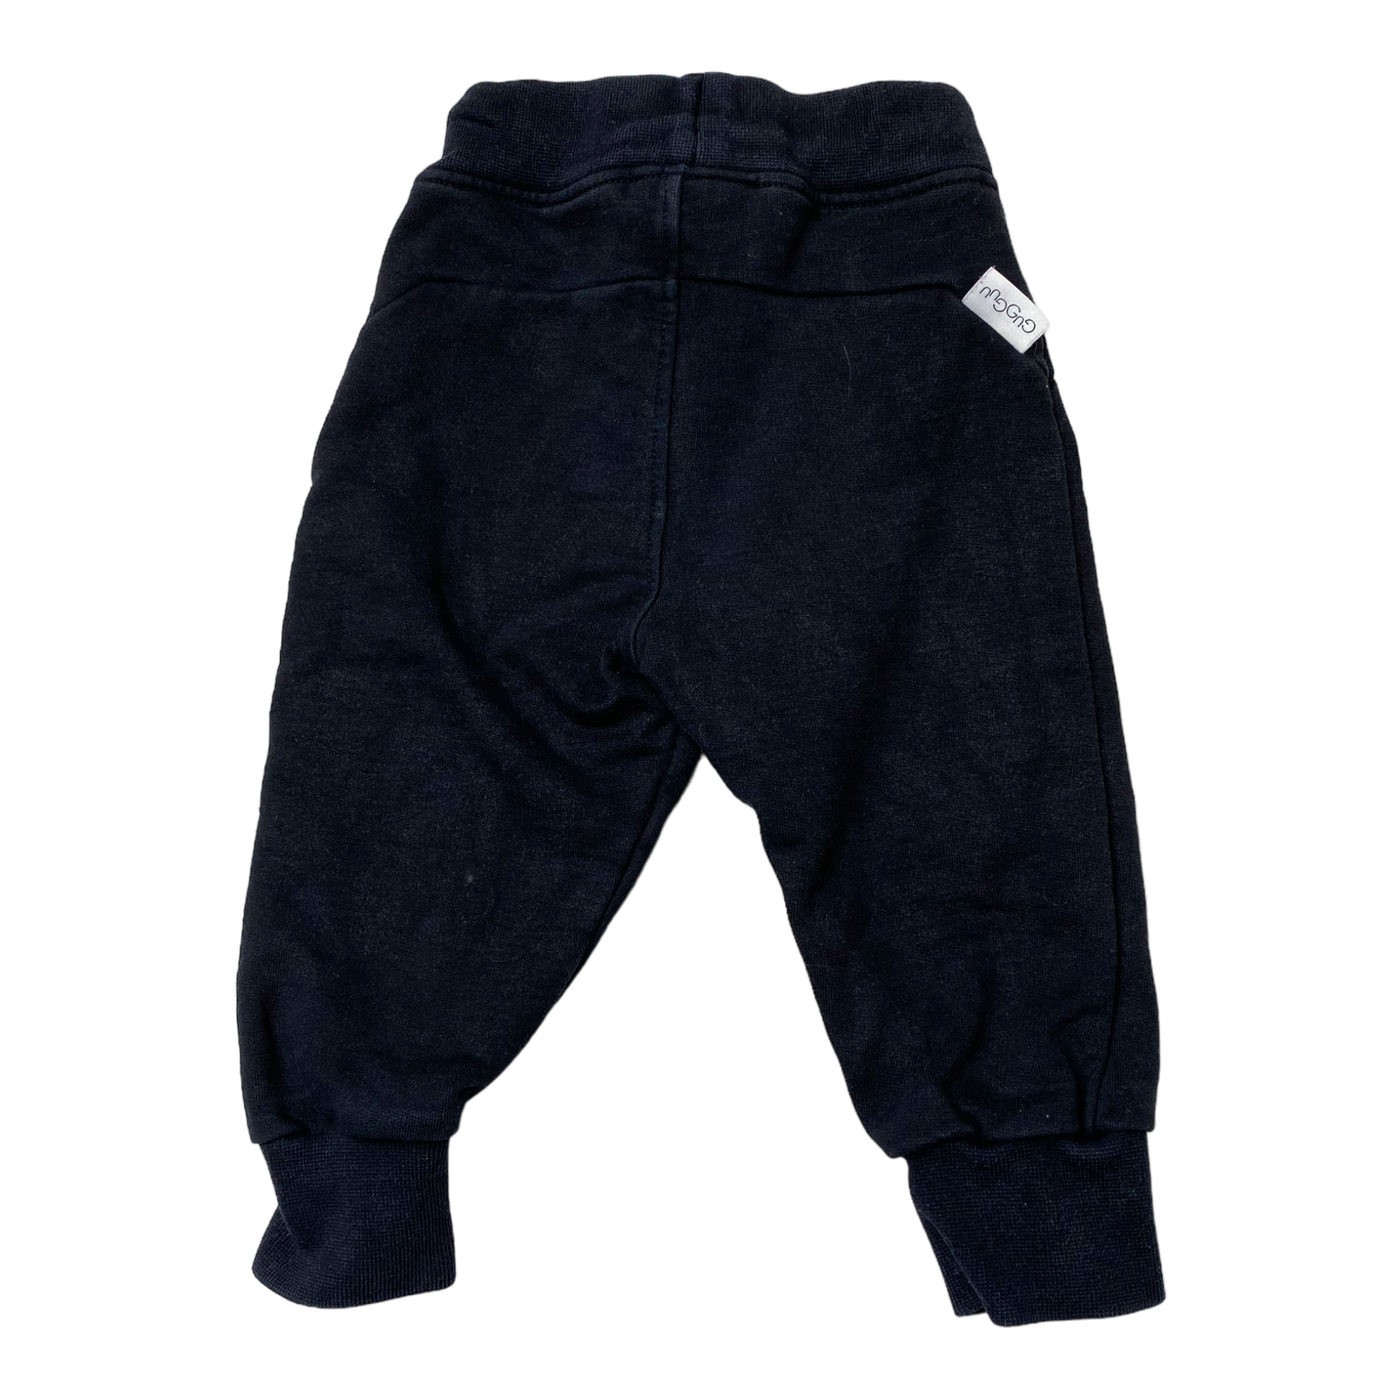 Gugguu sweatpants, black | 80cm